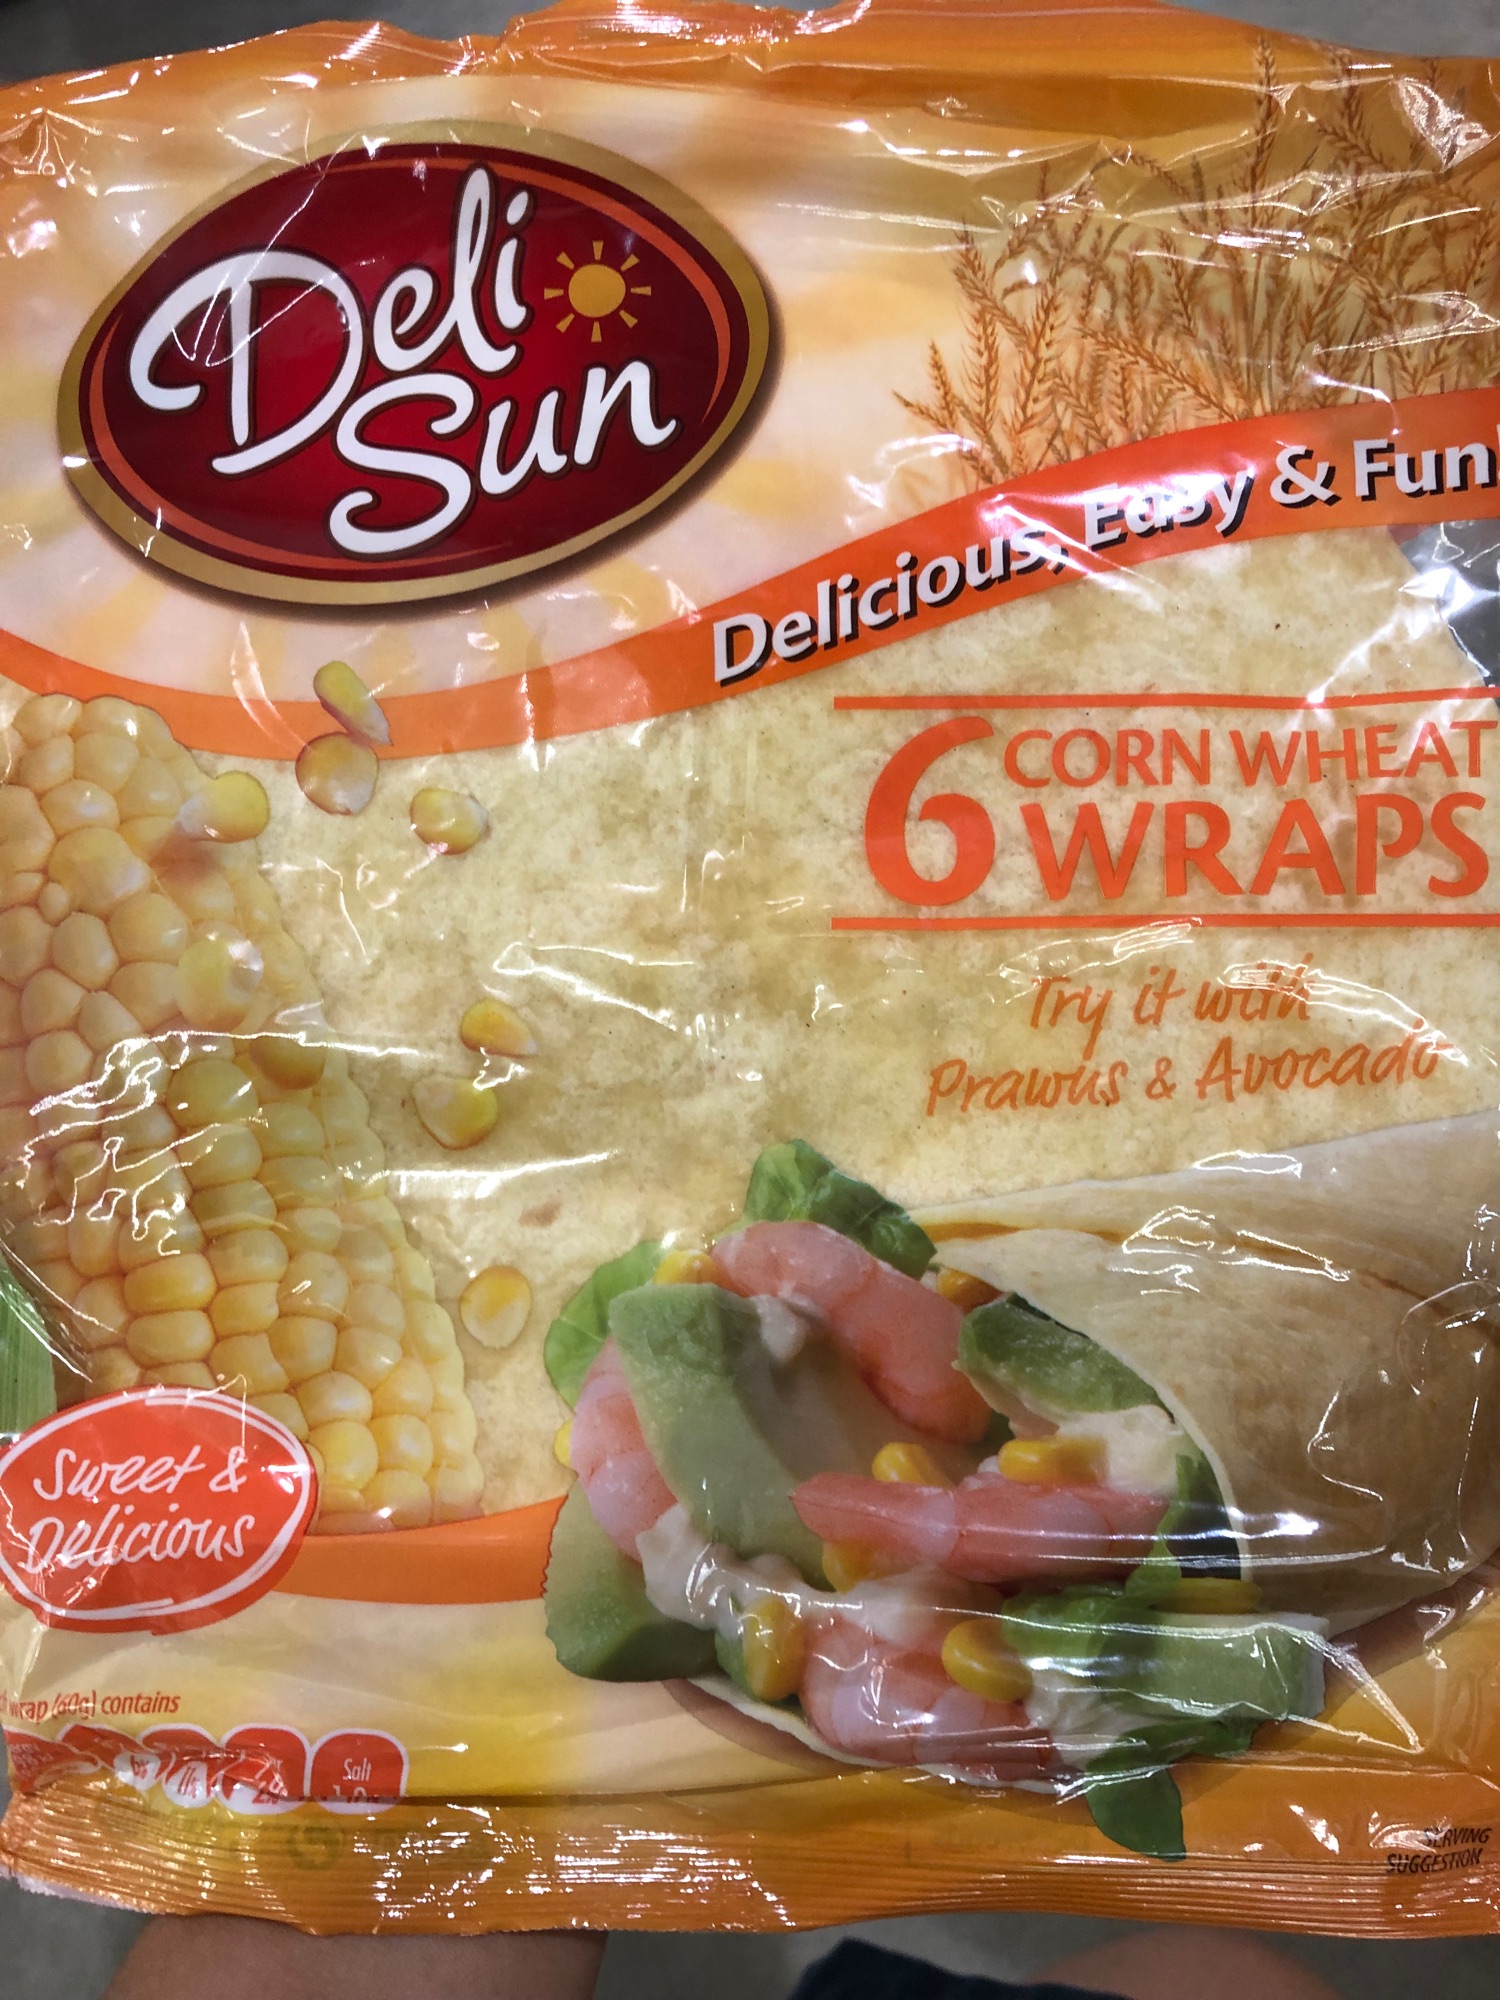 DeliSun Corn wheat แผ่นแป้งข้าวโพดตอร์ติญ่าขนาด 6 wraps